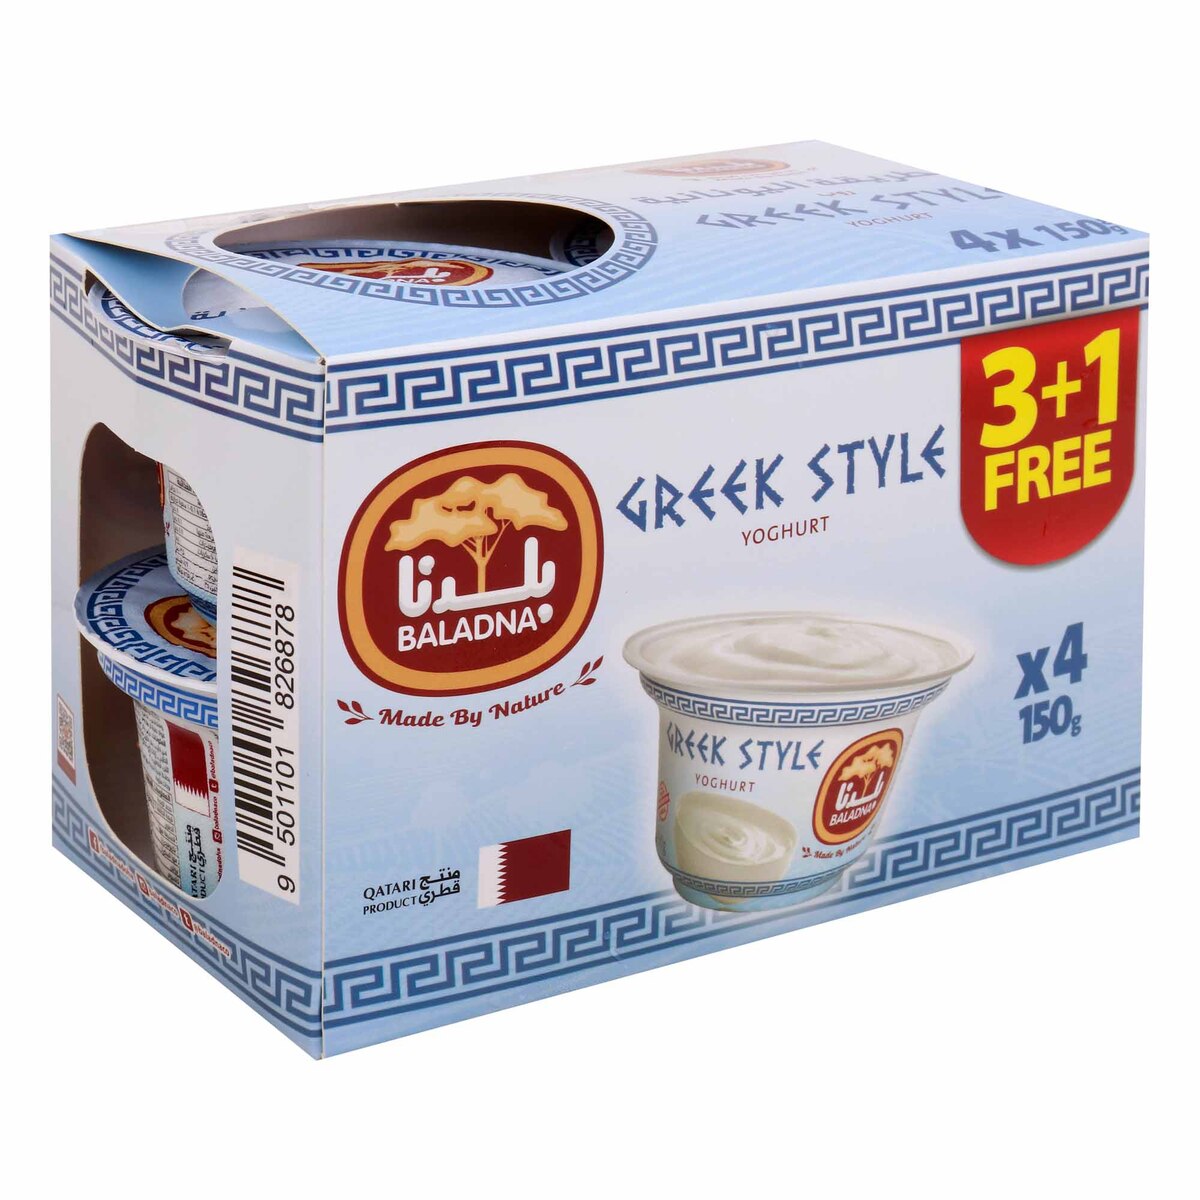 Baladna Greek Style Plain Yoghurt Cups, 4 x 150 g